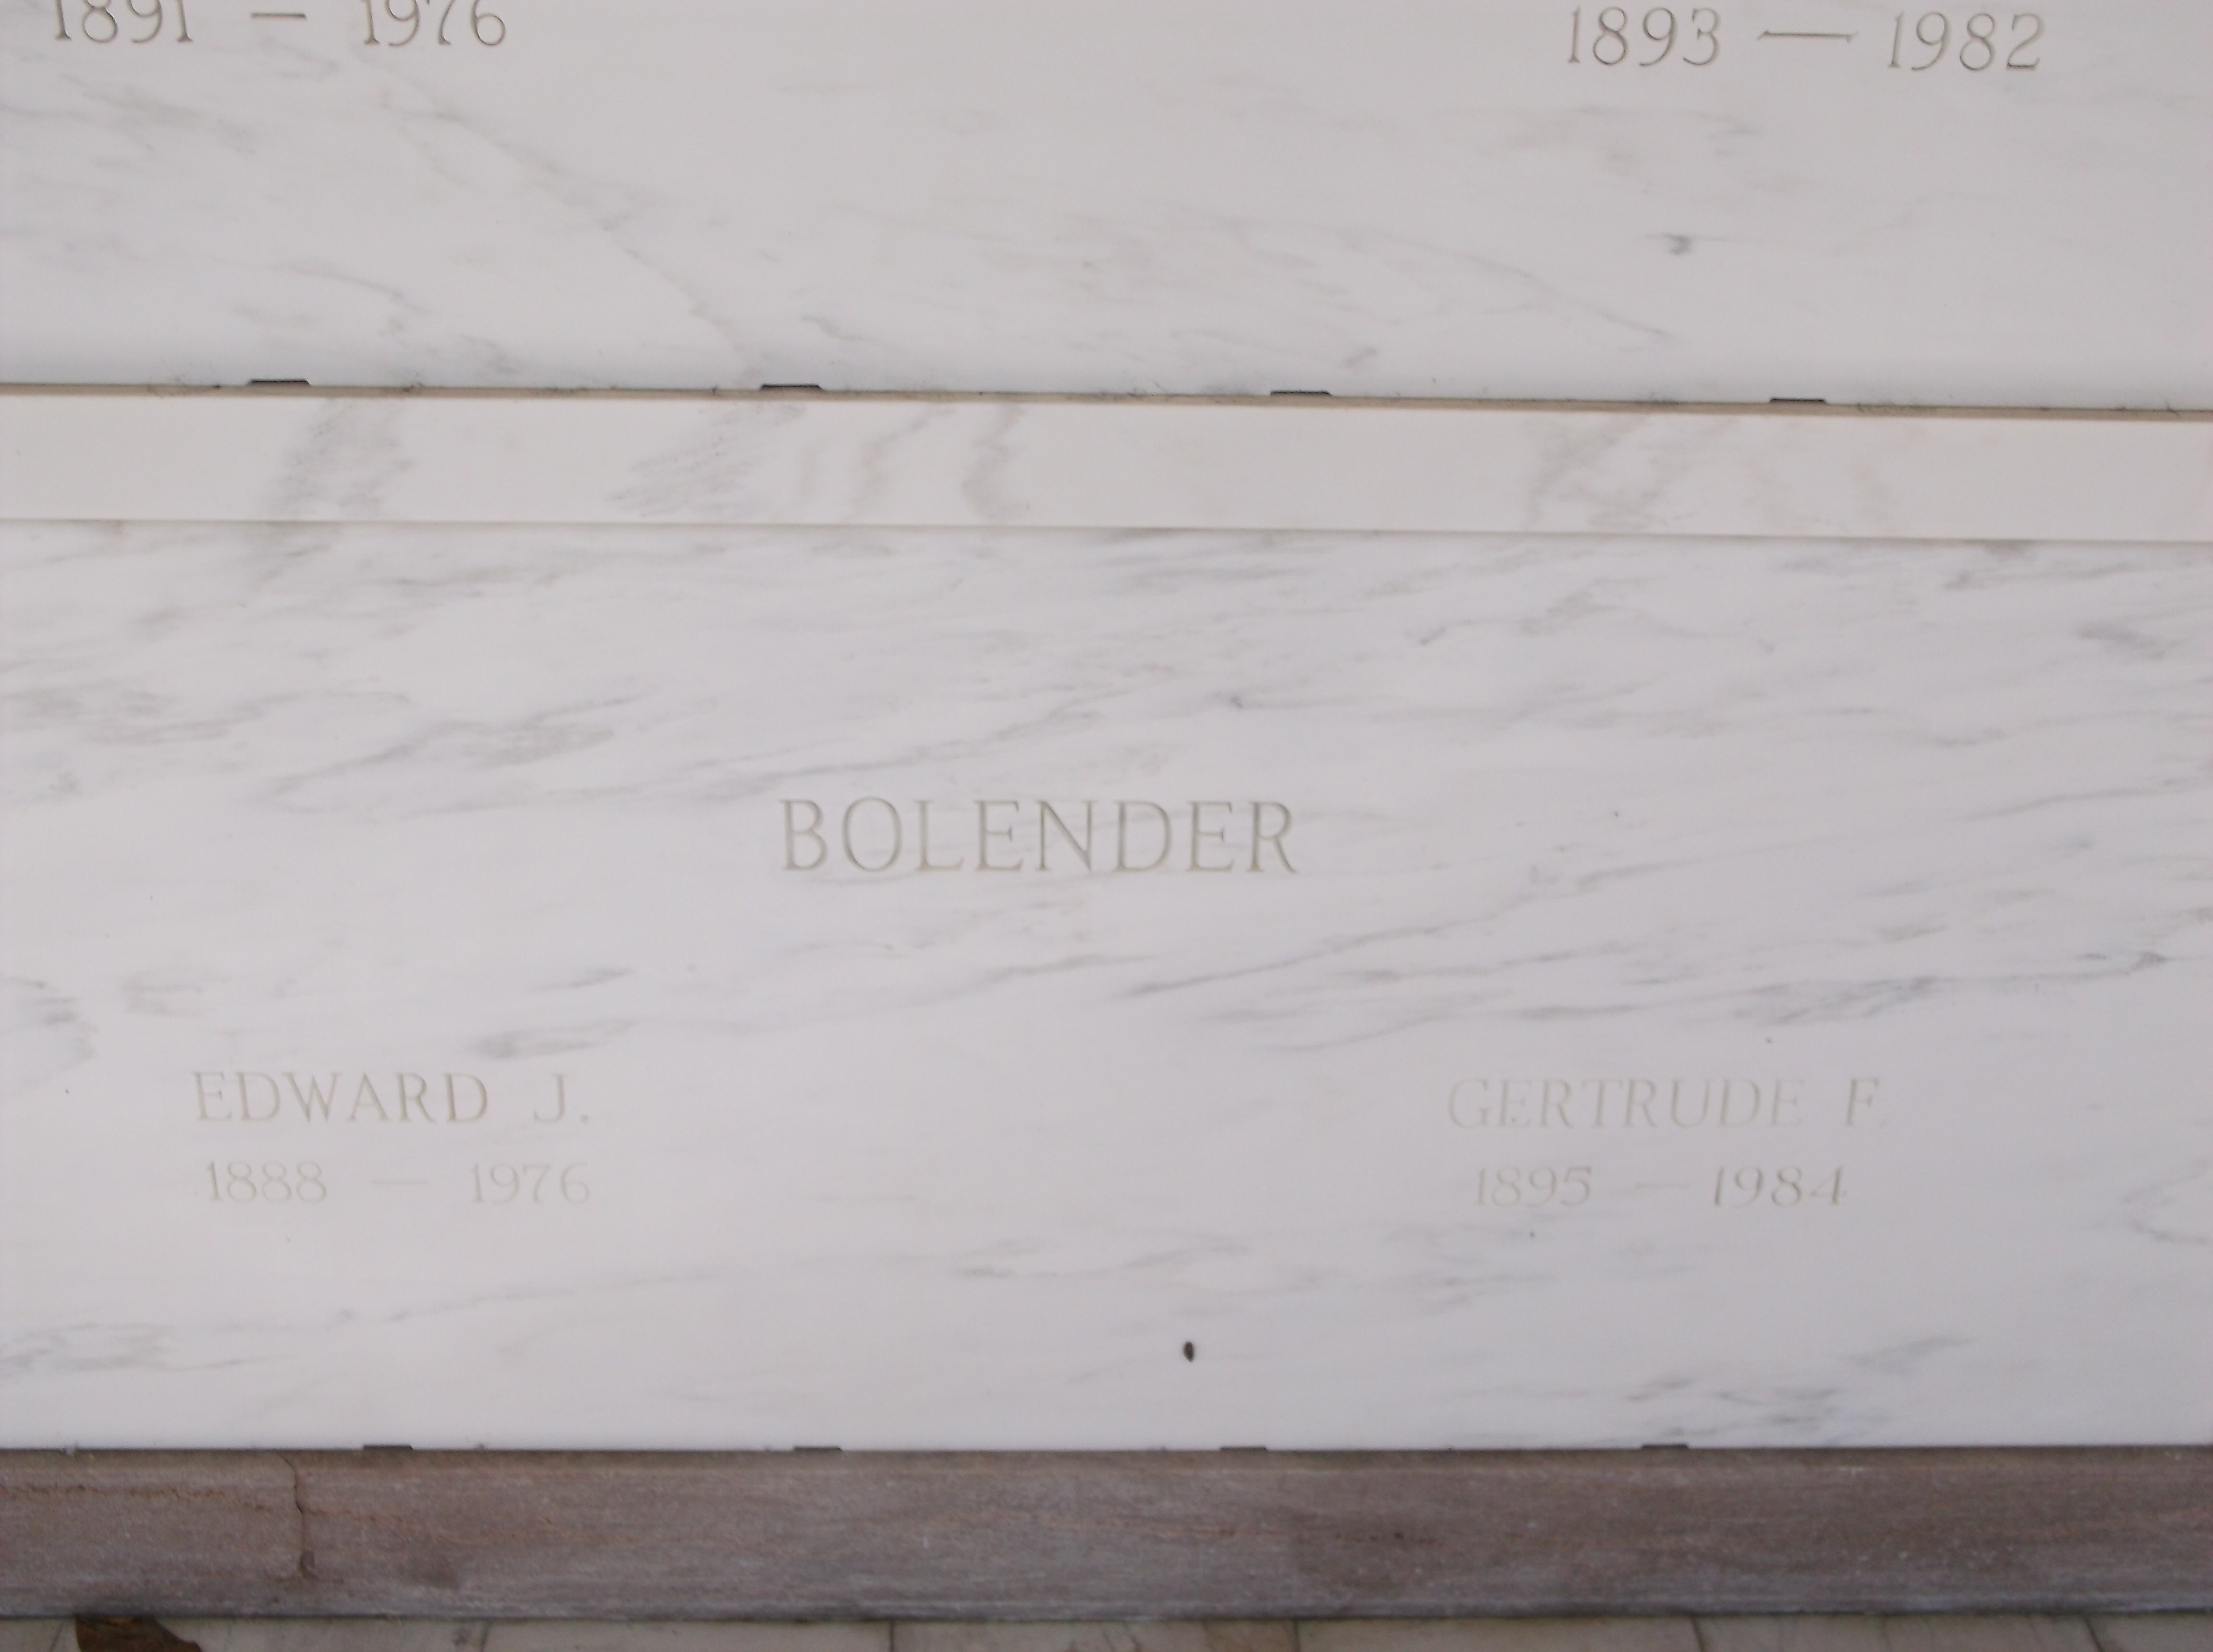 Gertrude F Bolender